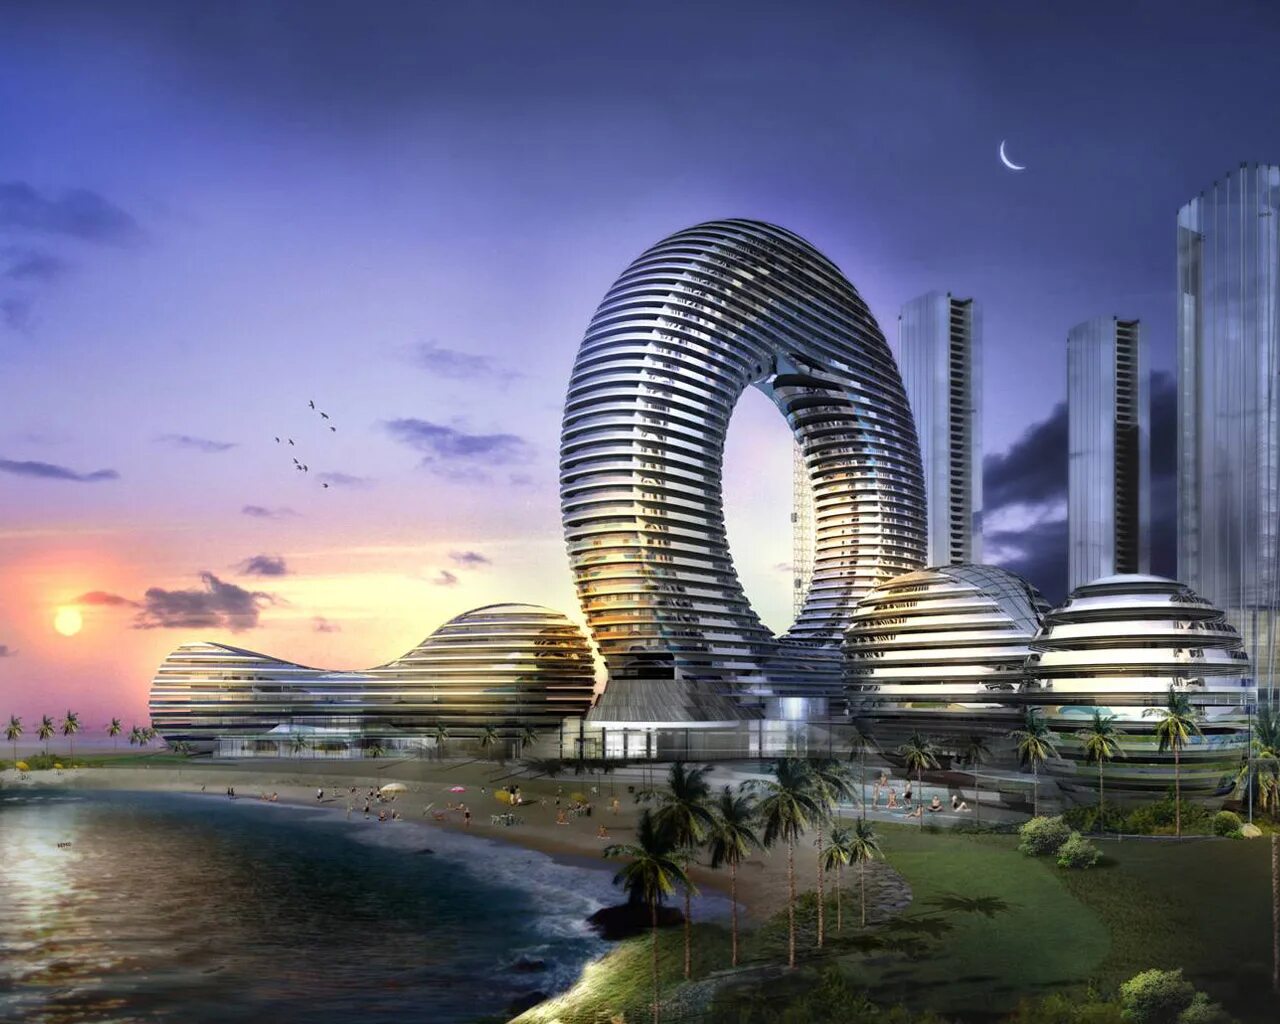 Дубай в будущем. Футуристическая архитектура Дубаи небоскрёбы. Дубай 2030. Дубаи архитектура 2020 год. Футуристические небоскребы будущего Дубай.